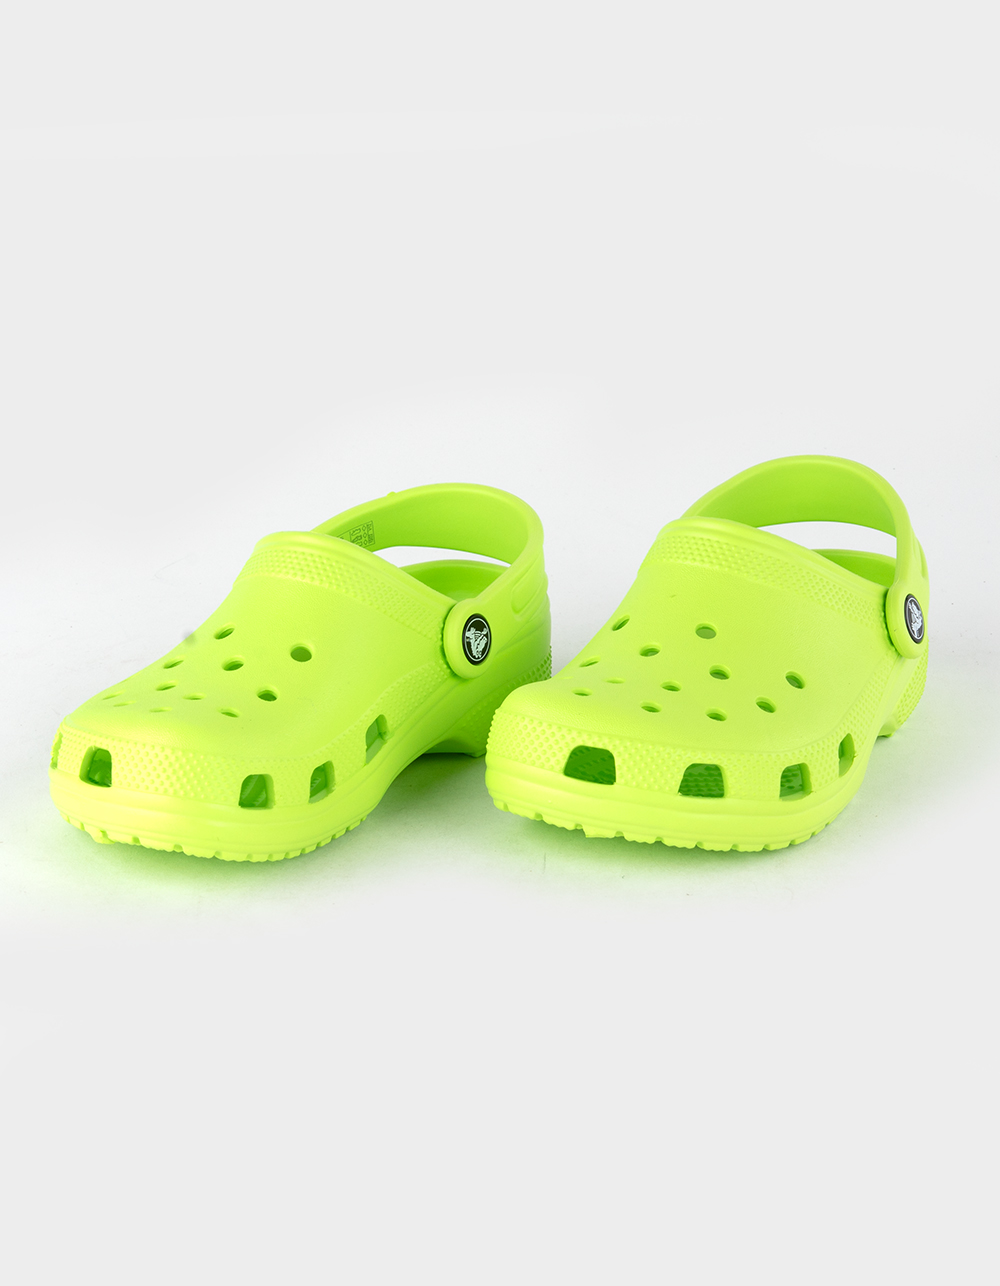 crocs shoes for kids